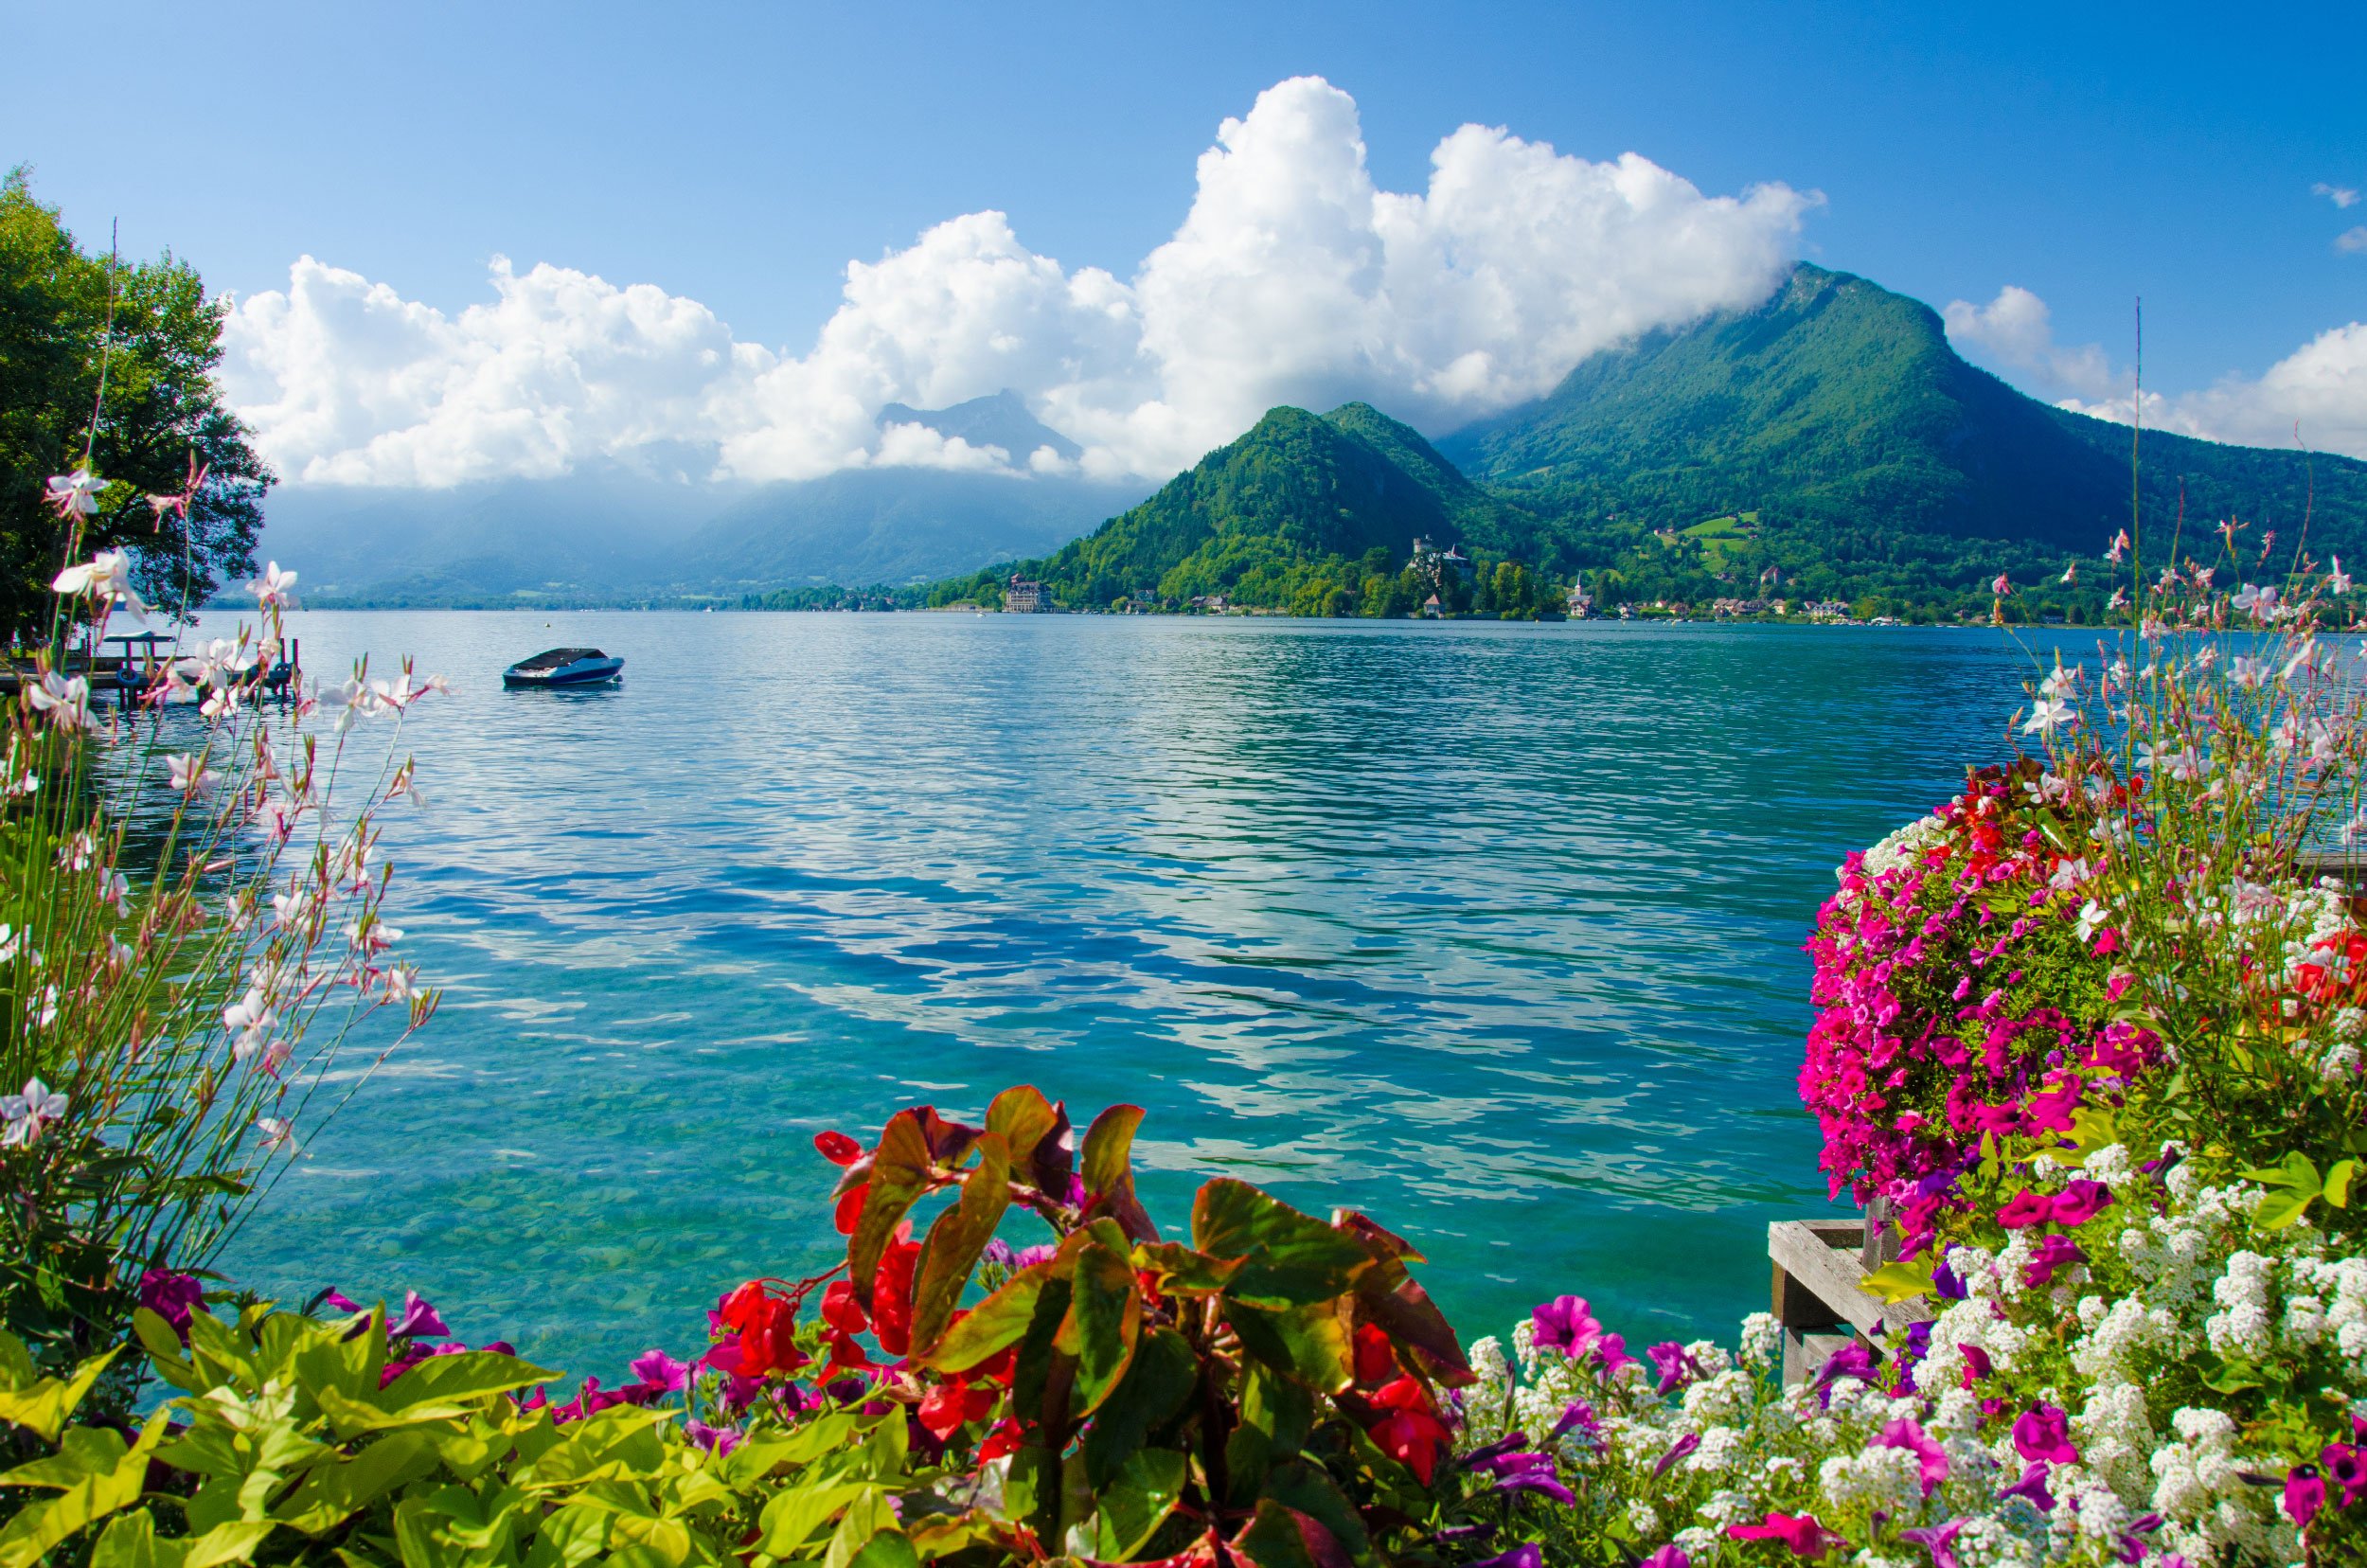 Switzerland & France: Lake Geneva, Annecy & Valleys of the Alps
